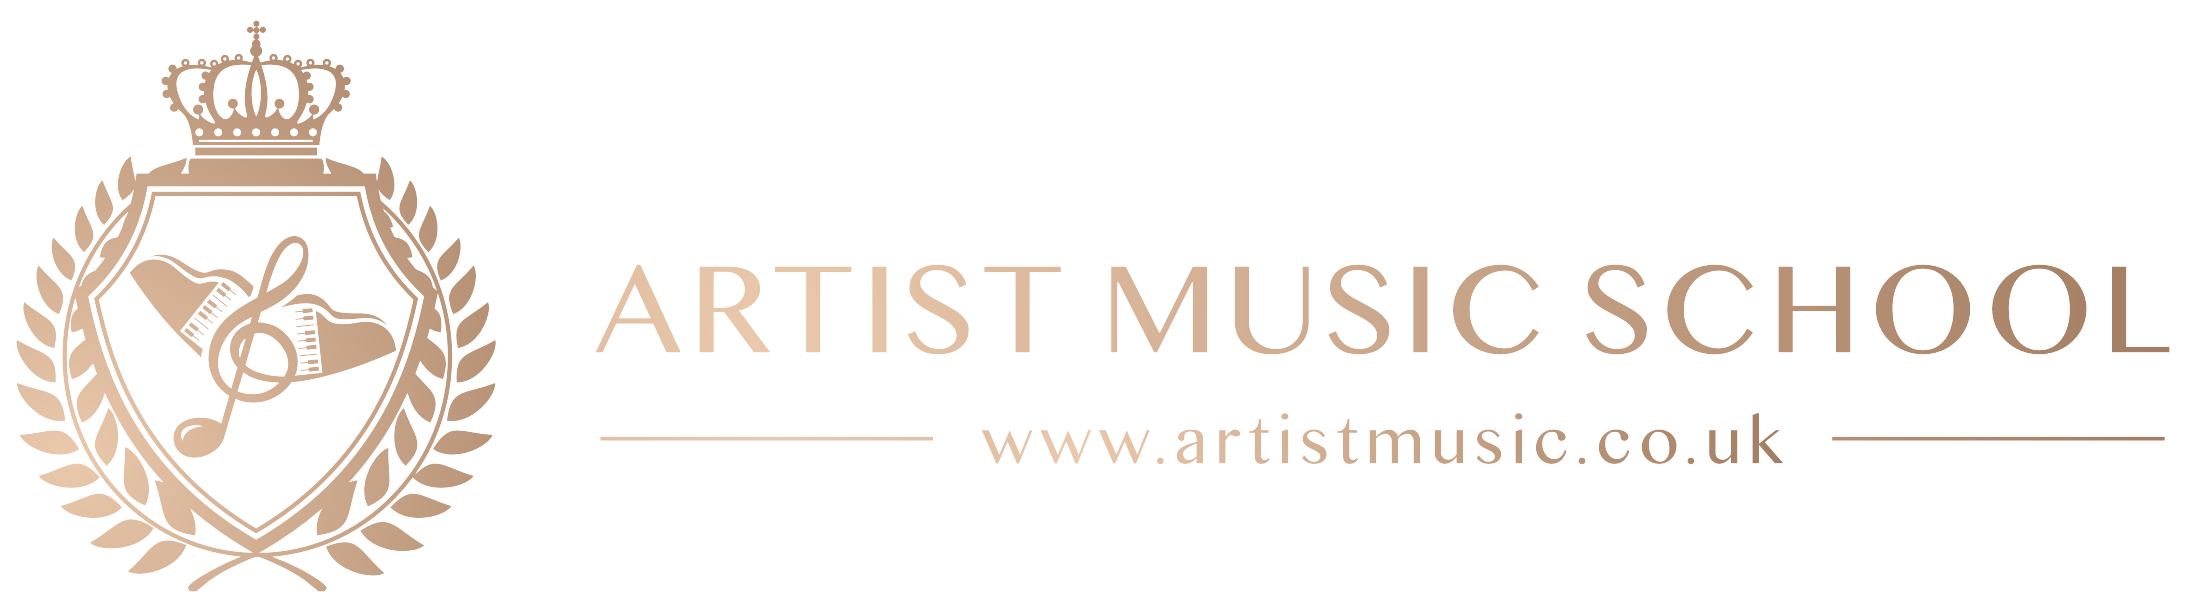 Artist Music School